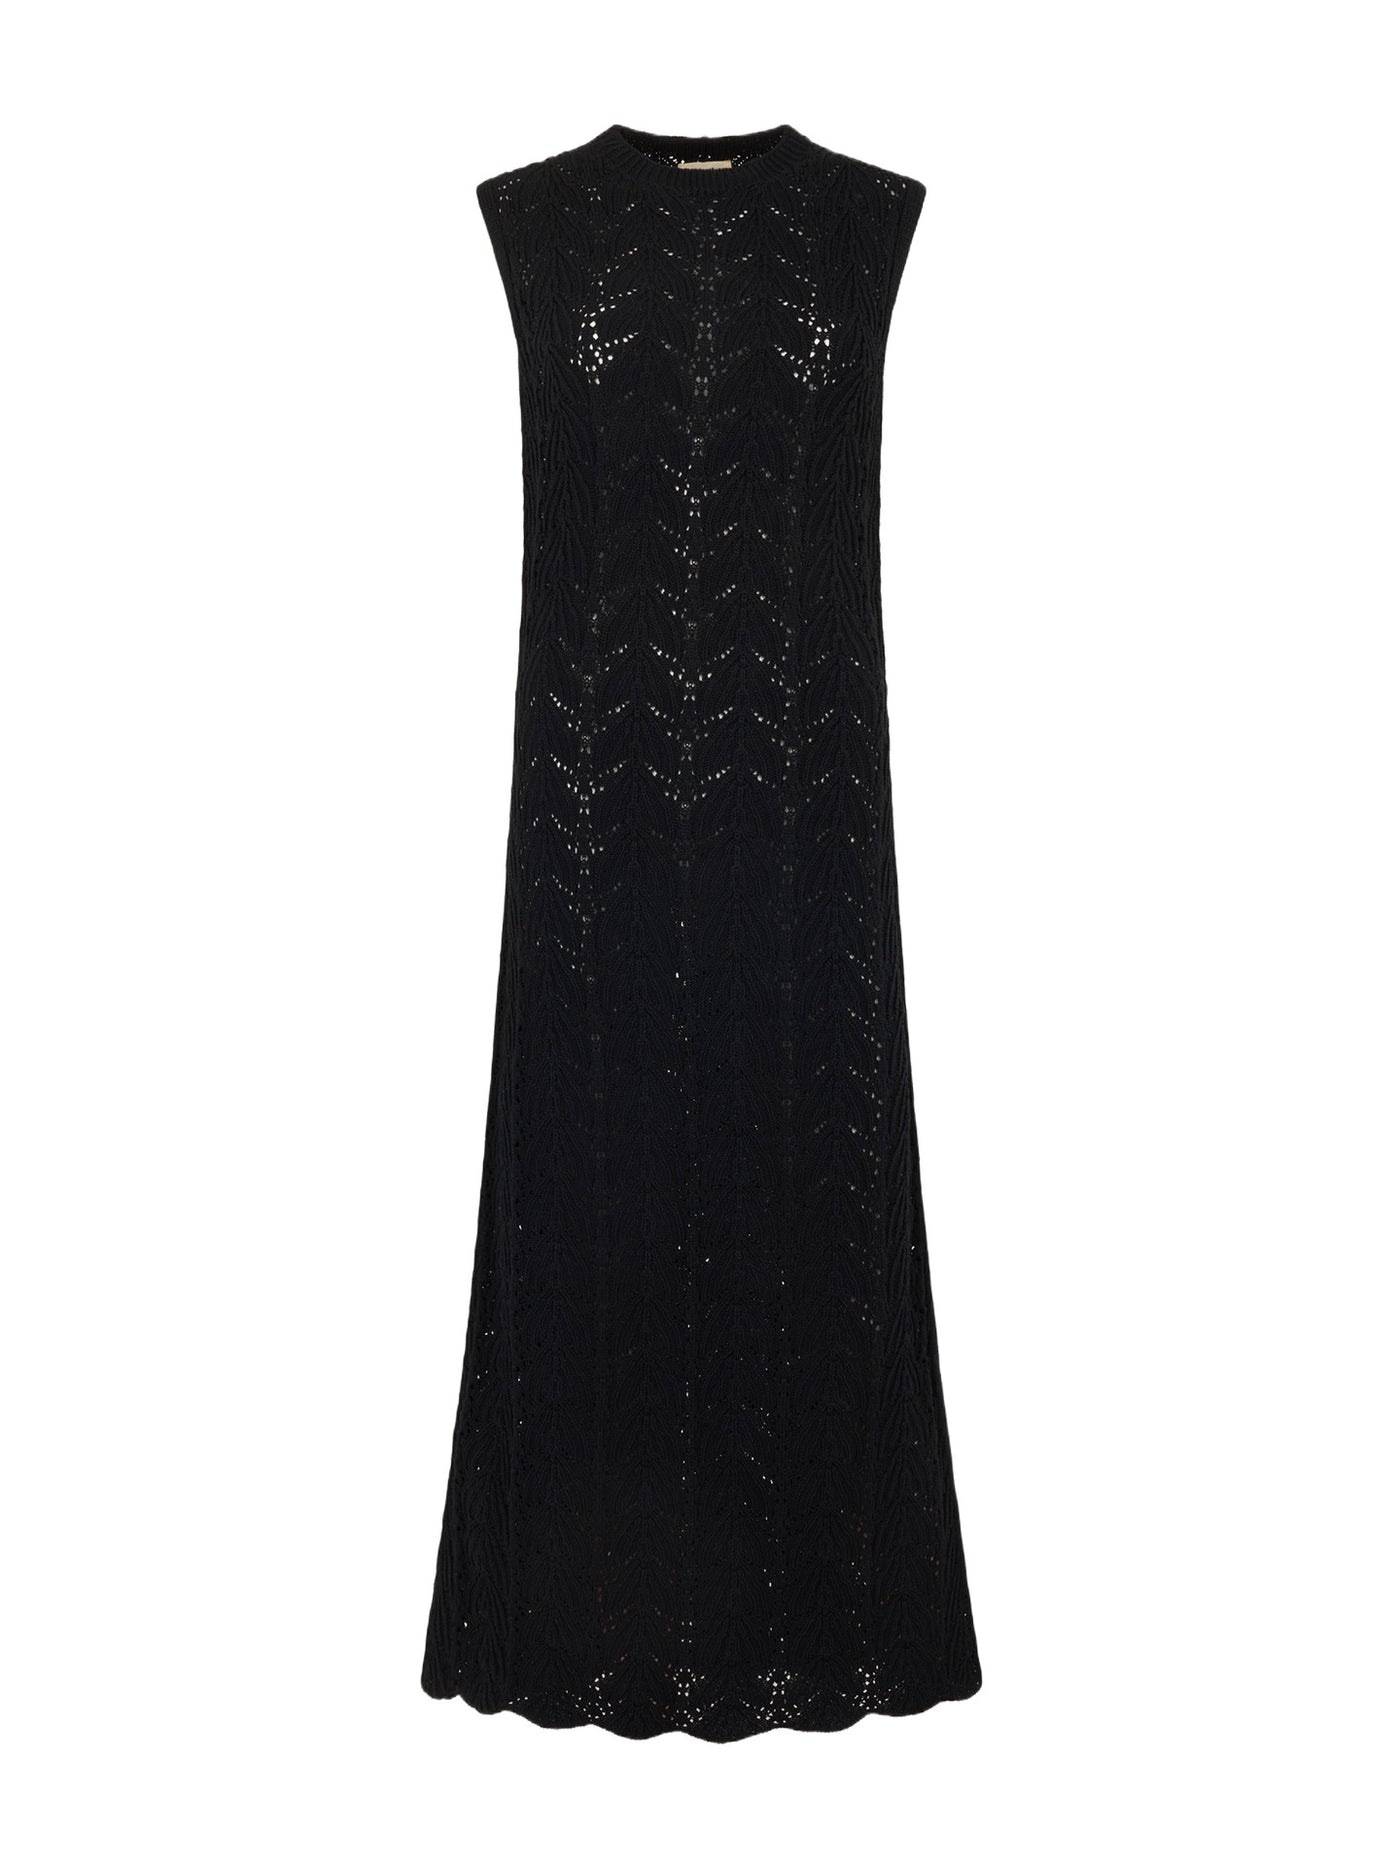 TRENTO Crochet Dress in Black